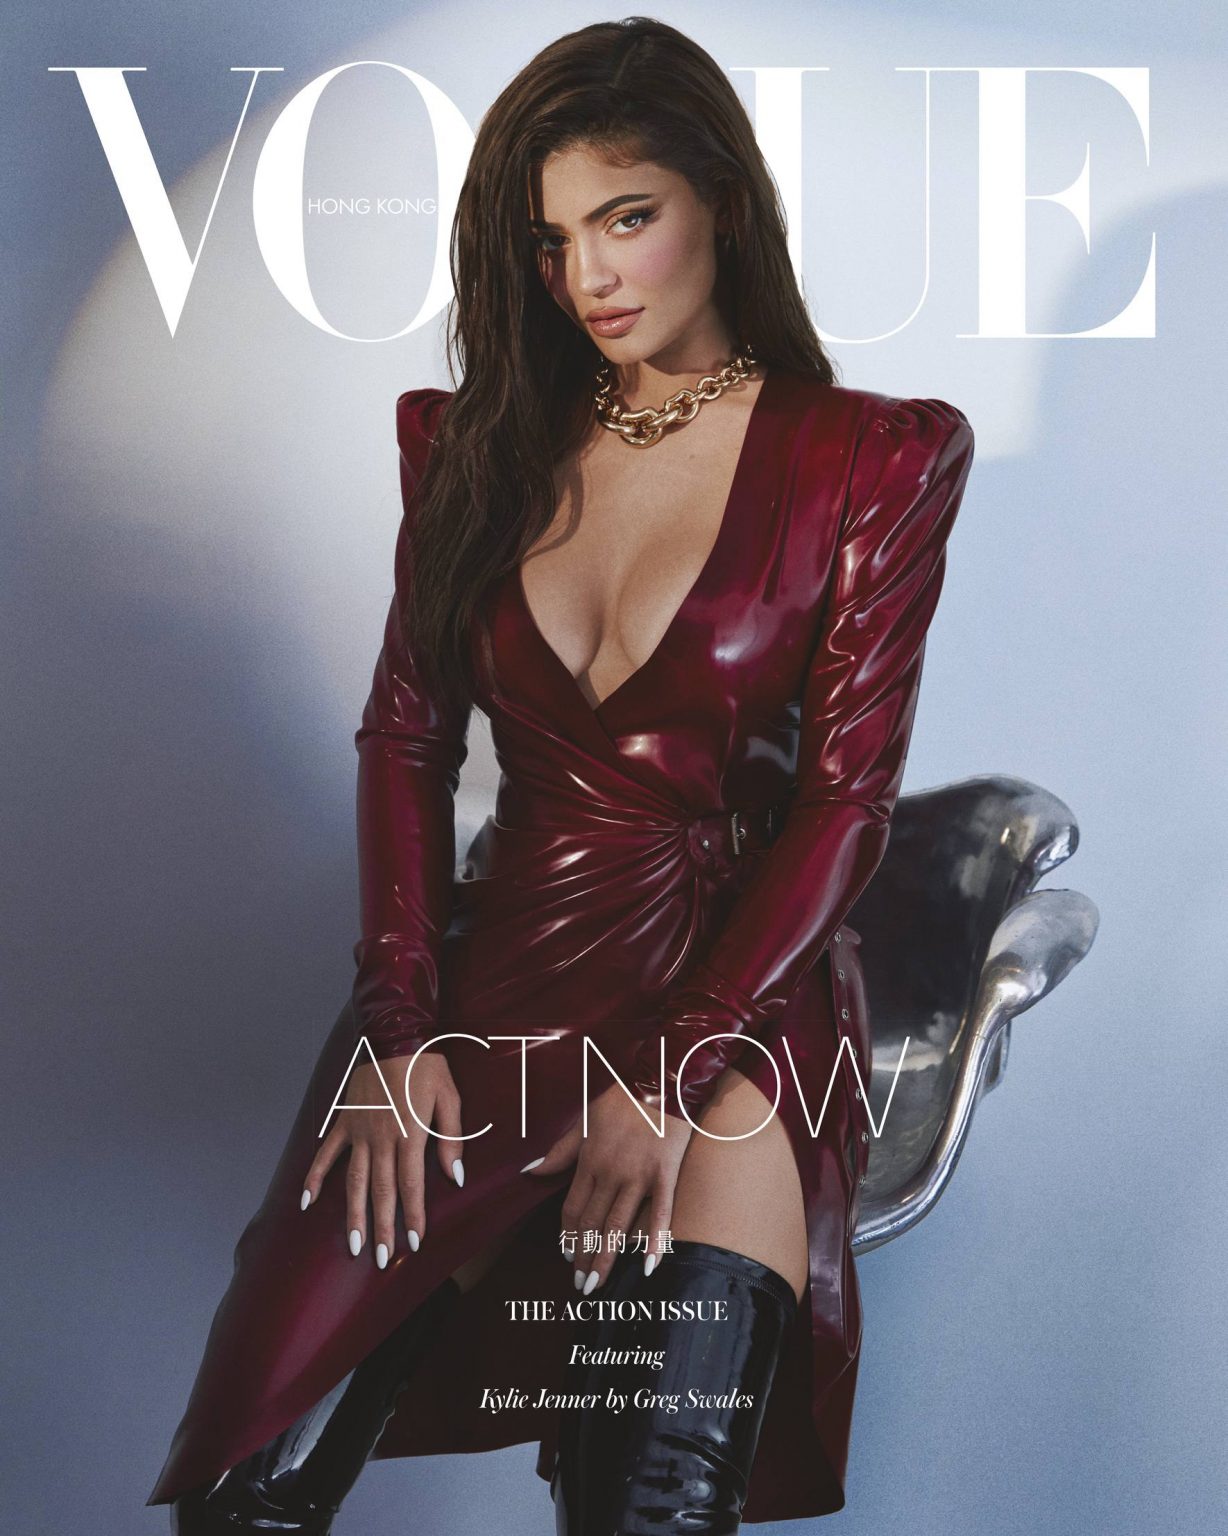 PHOTOS Kylie Jenner Airbrushed  Oblivion pour Vogue! - Photo 5